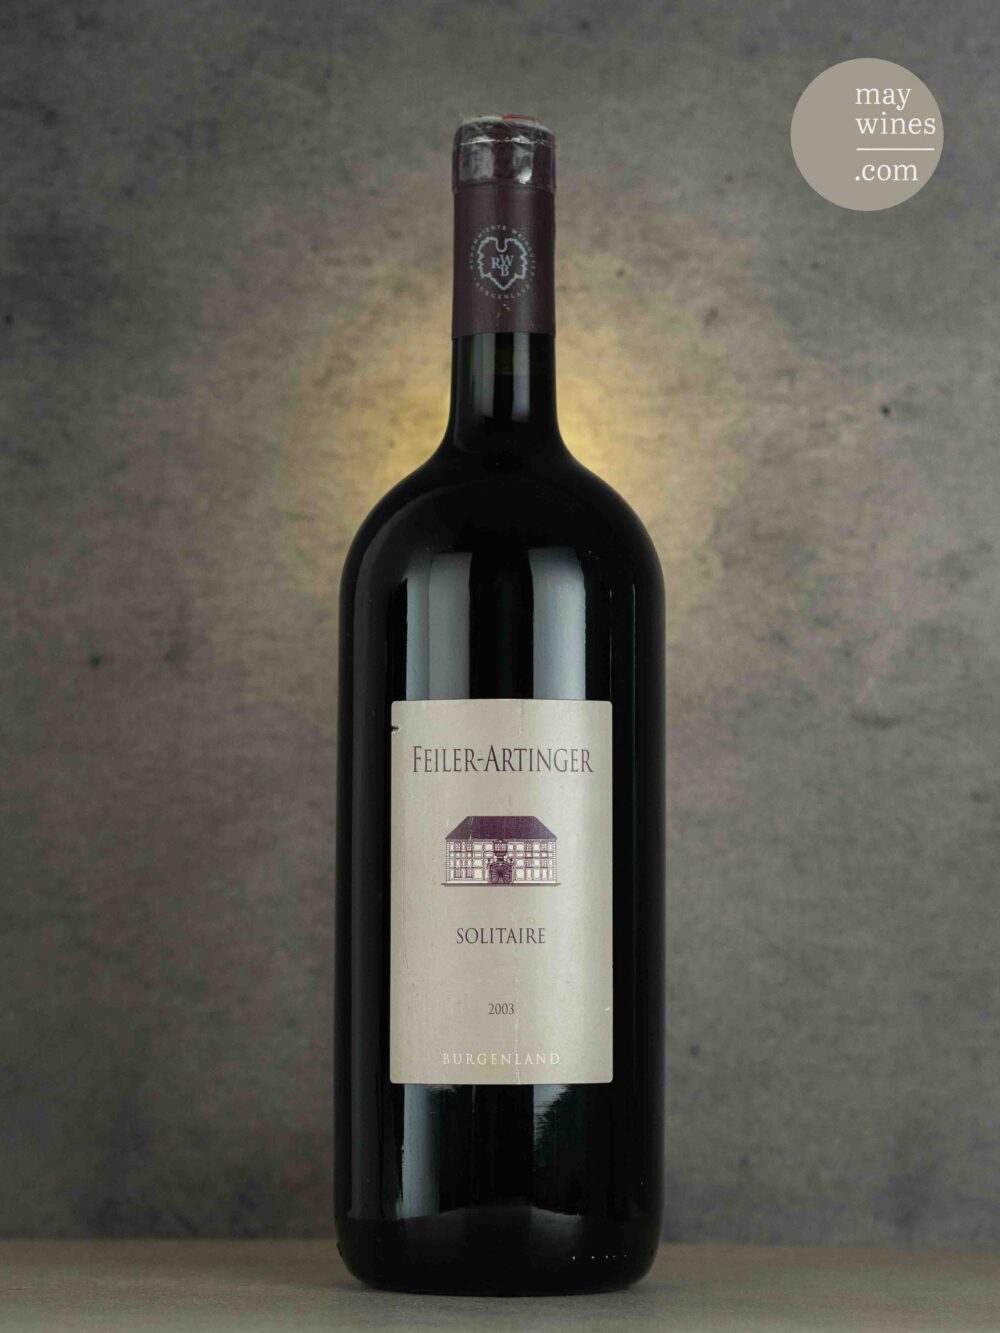 May Wines – Rotwein – 2003 Solitaire MAG - Weingut Feiler-Artinger